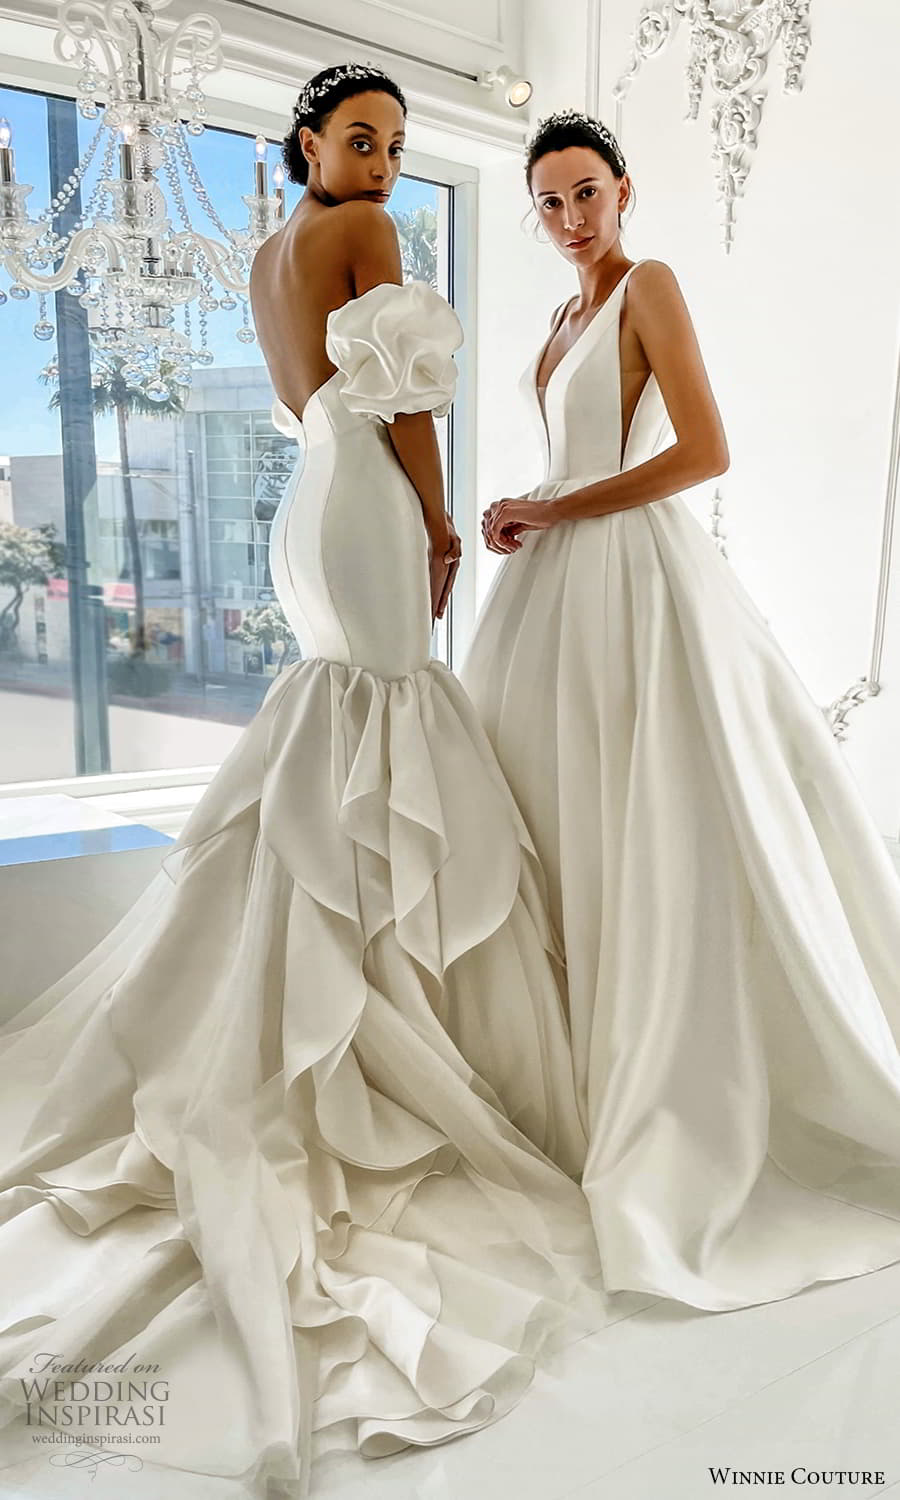 Winnie Couture wedding dresses